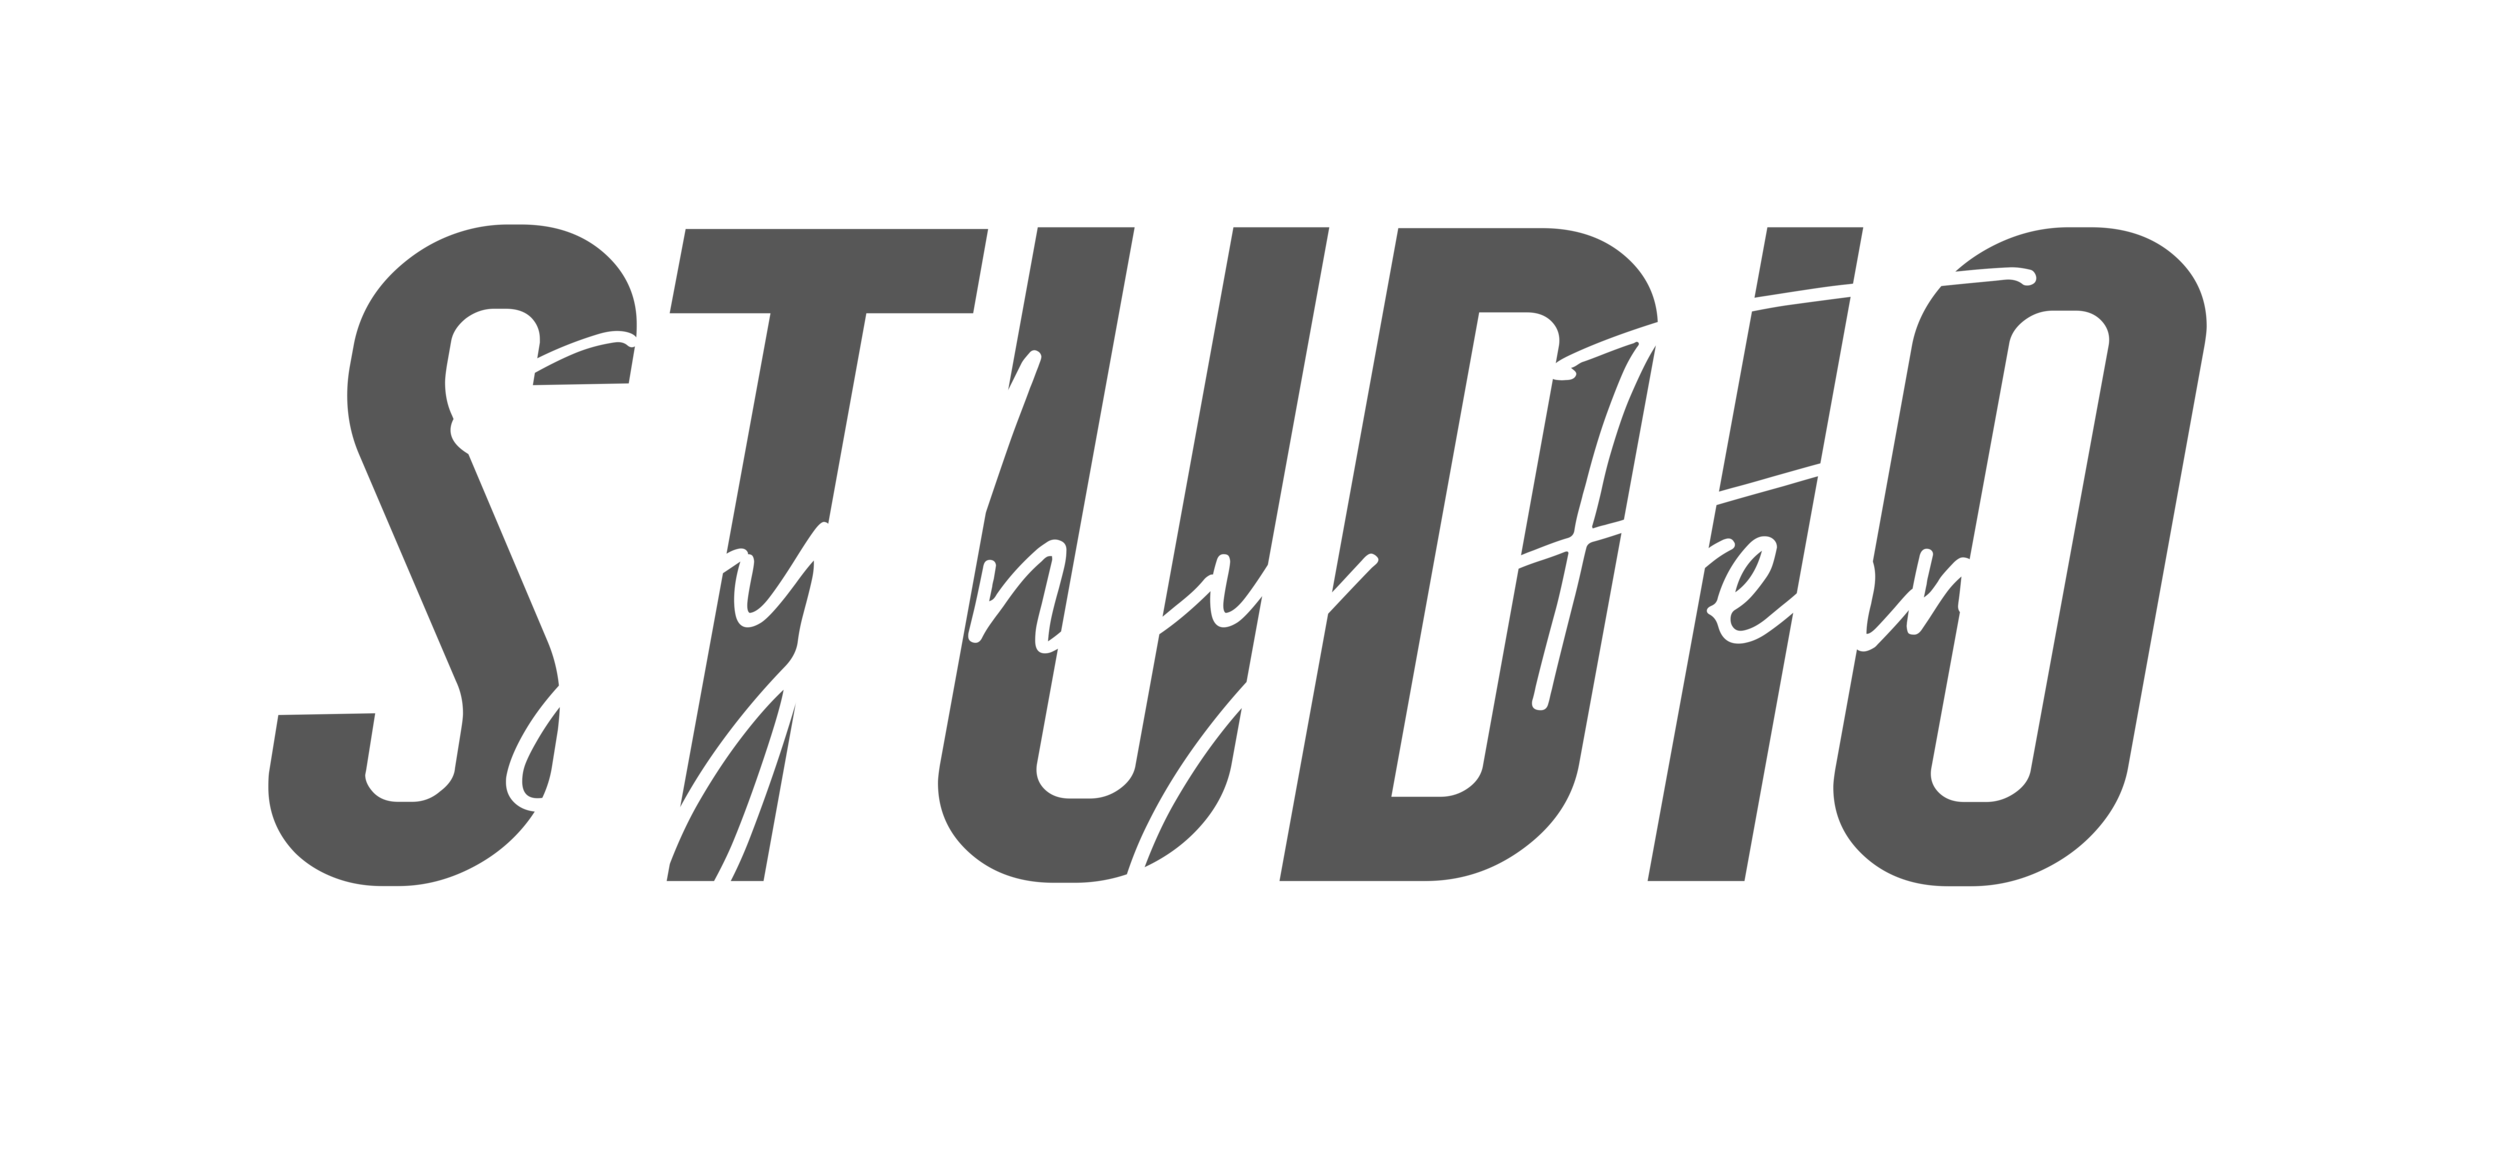 SYDNEY FREAM STUDIO